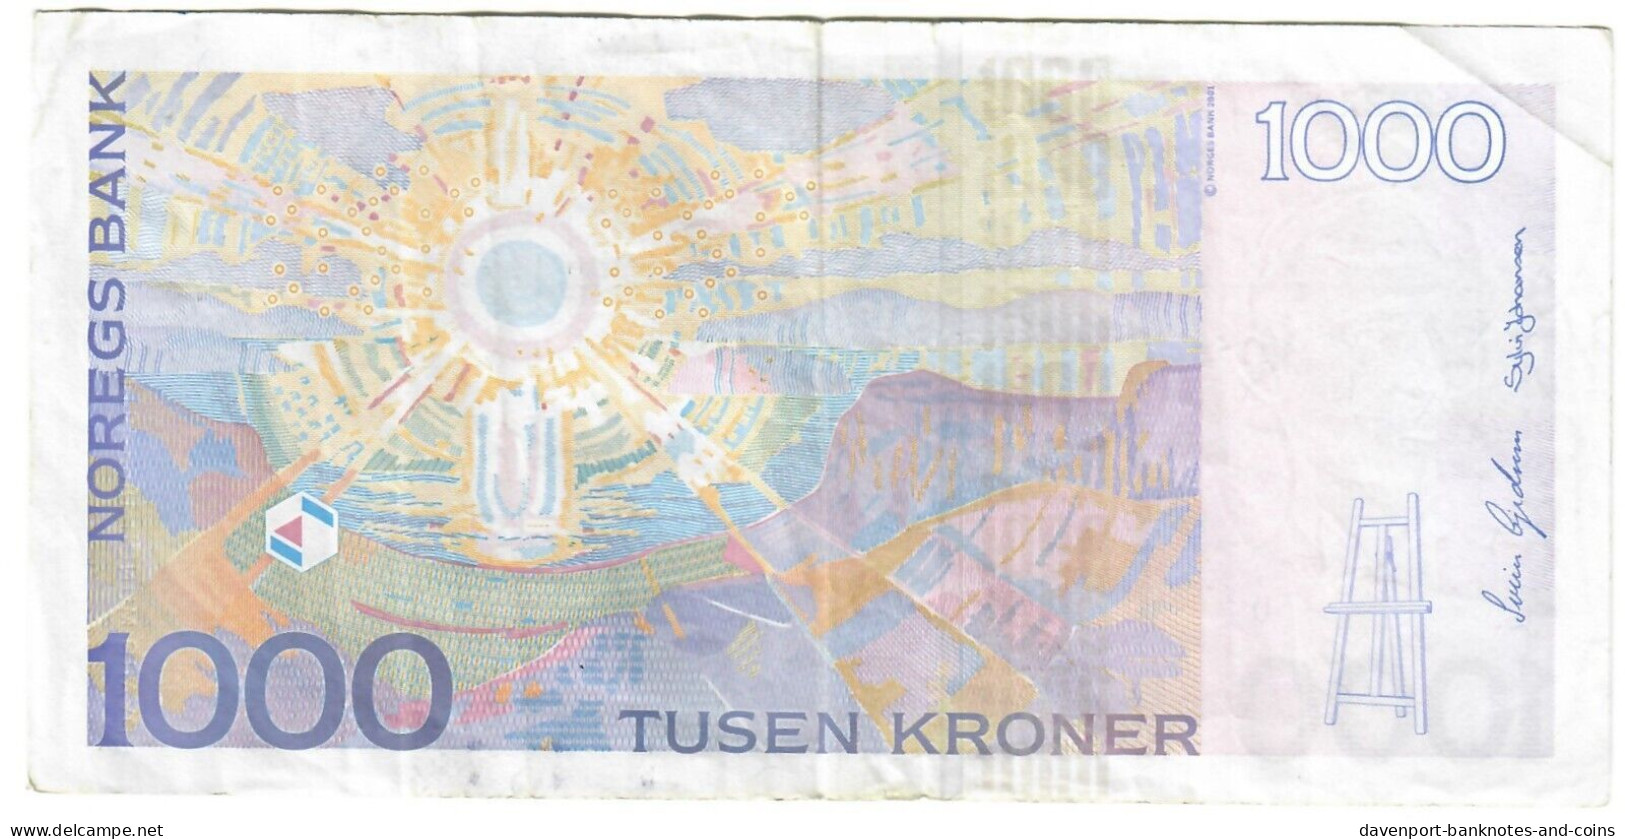 Norway 1000 Kroner 2001 F/VF - Norway